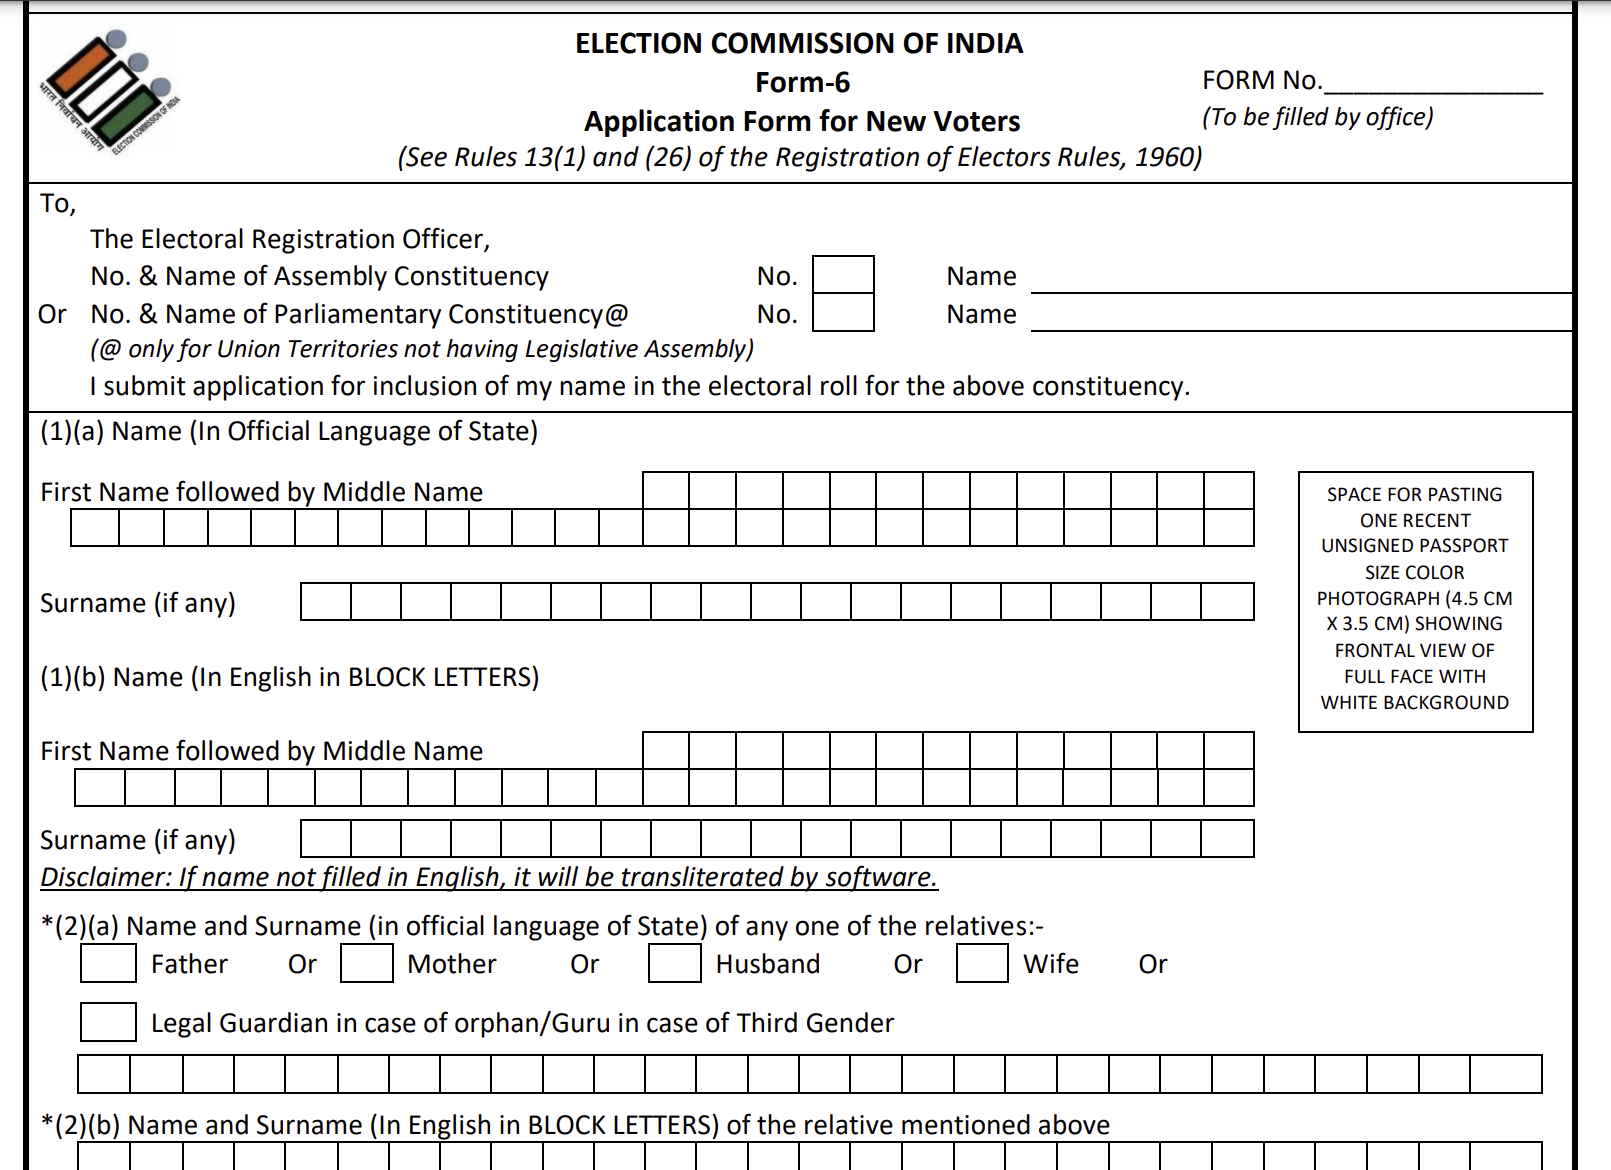 Voter Applicant Form 6